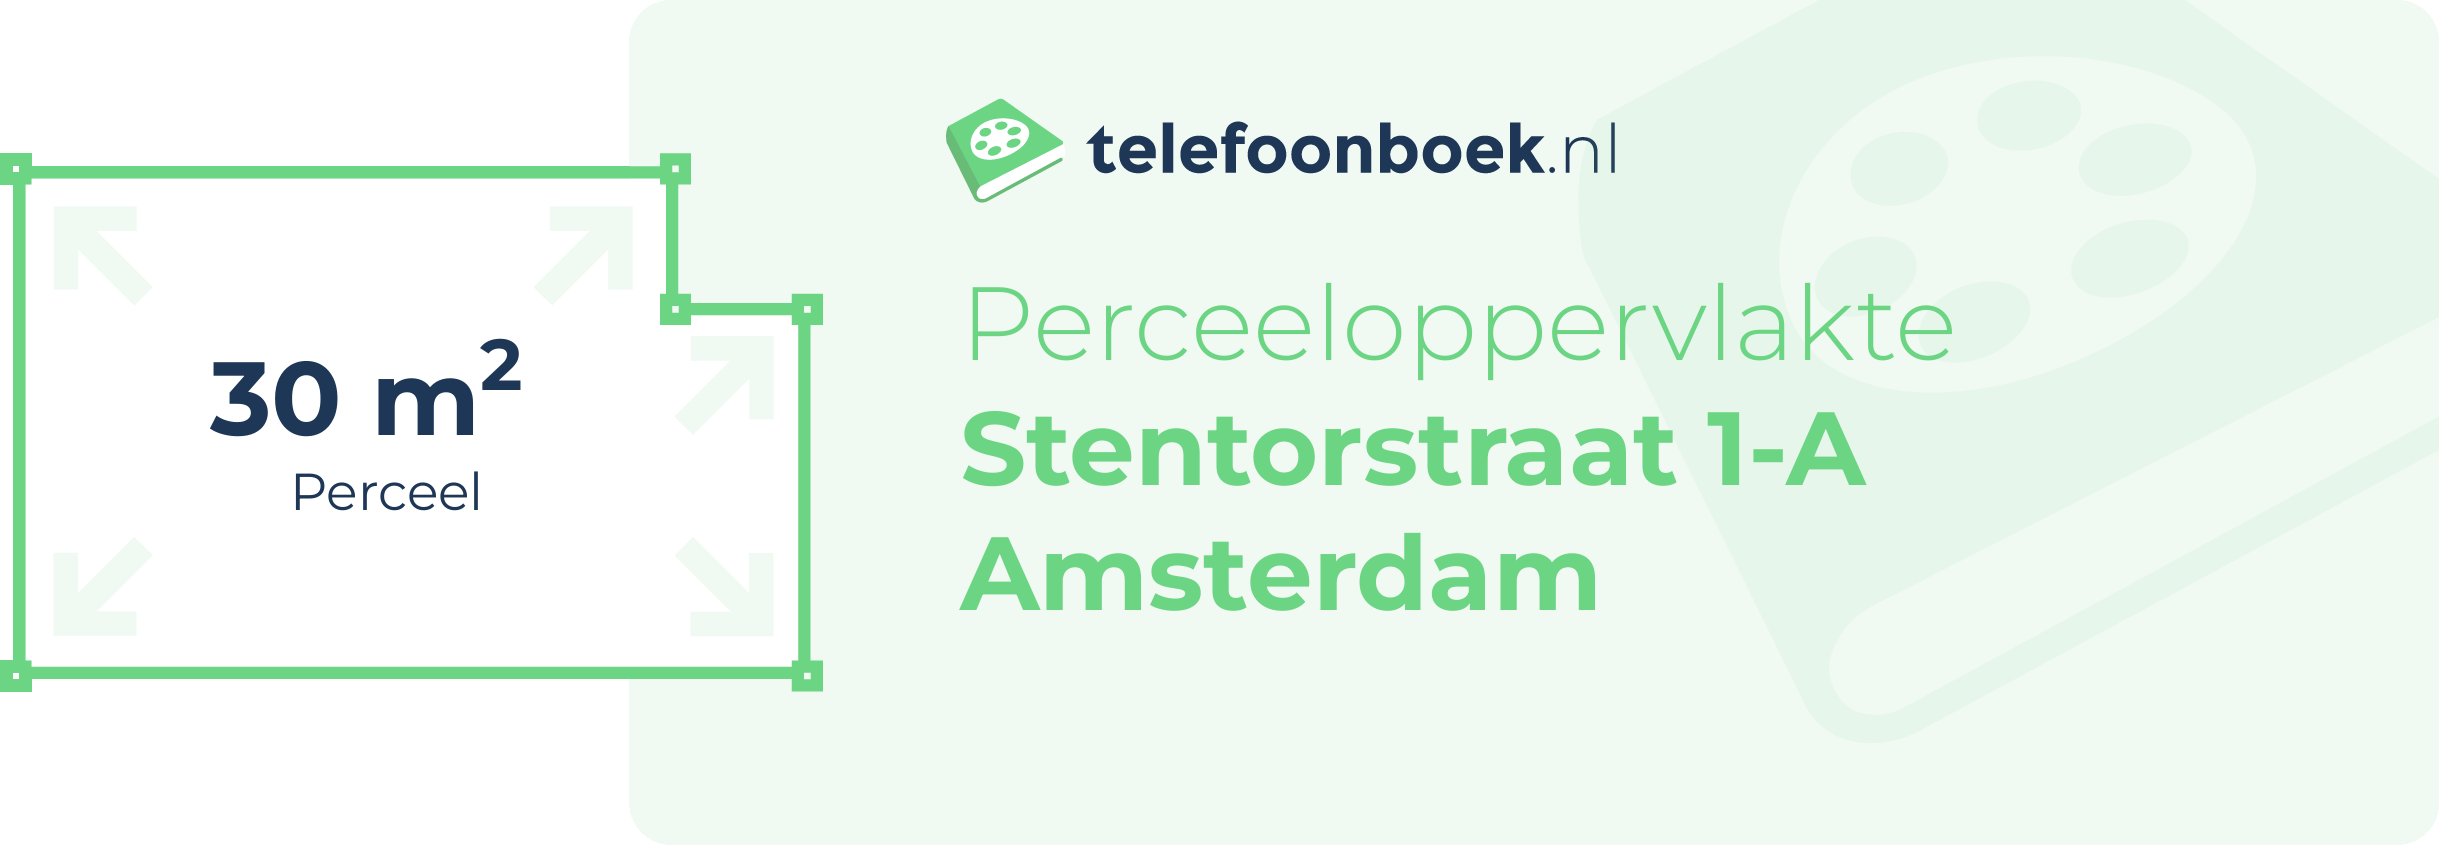 Perceeloppervlakte Stentorstraat 1-A Amsterdam